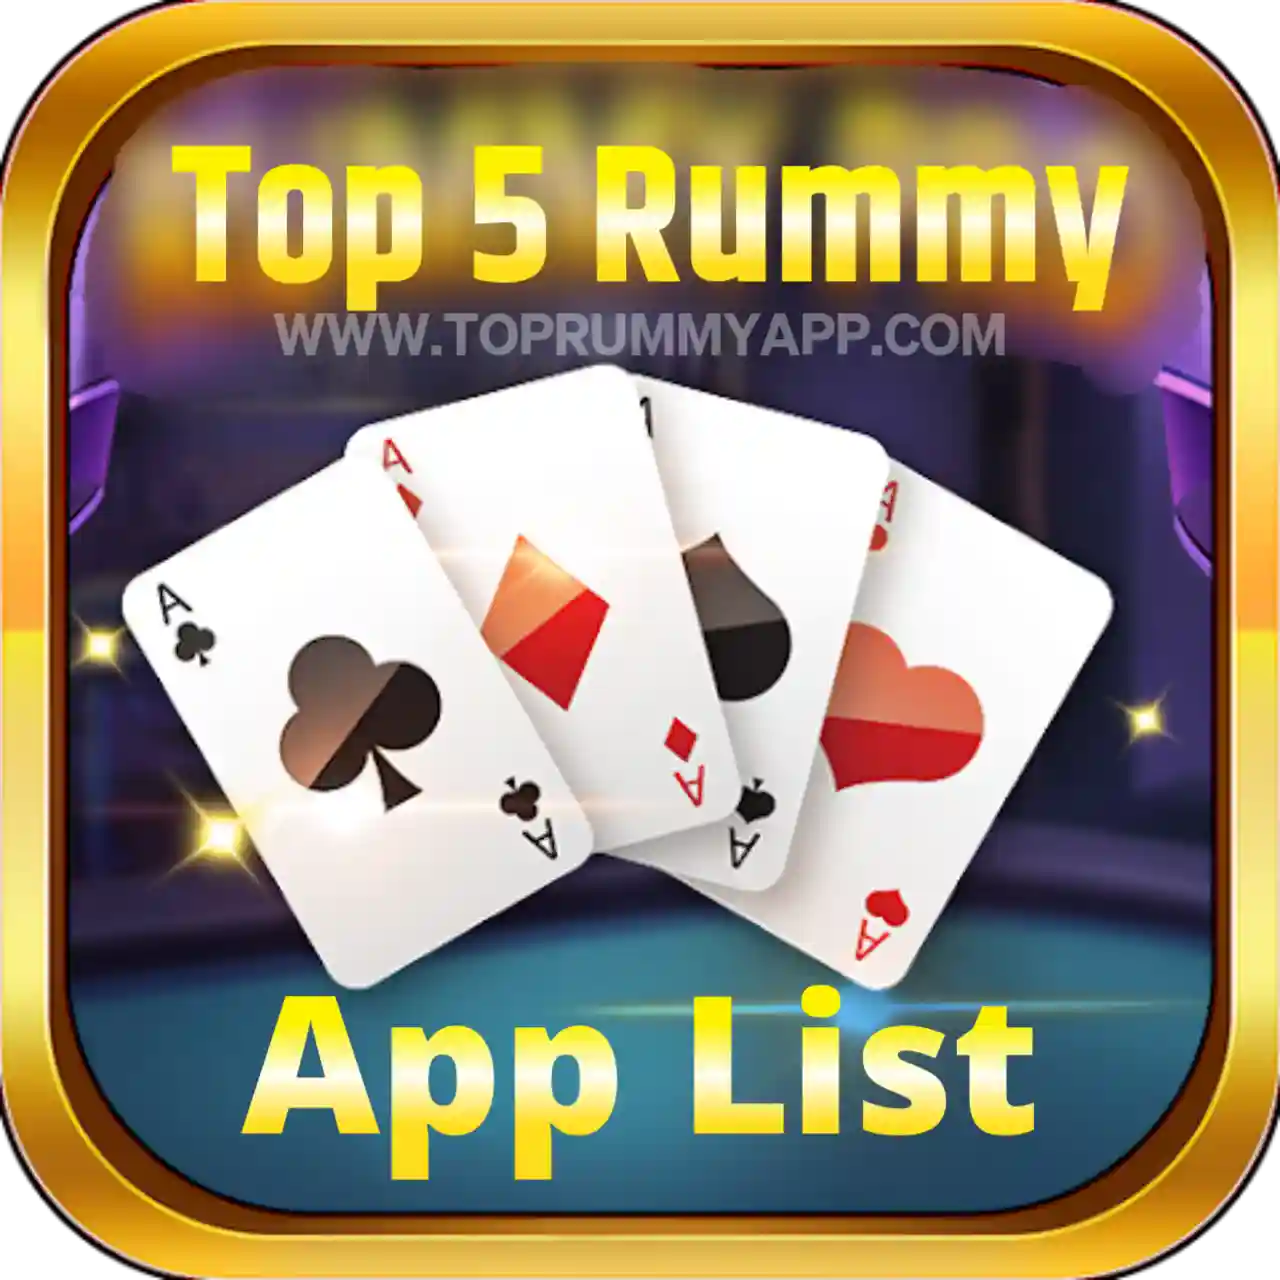 Top 5 Rummy Apk List 2024 - Top 5 Rummy App List 41 Bonus